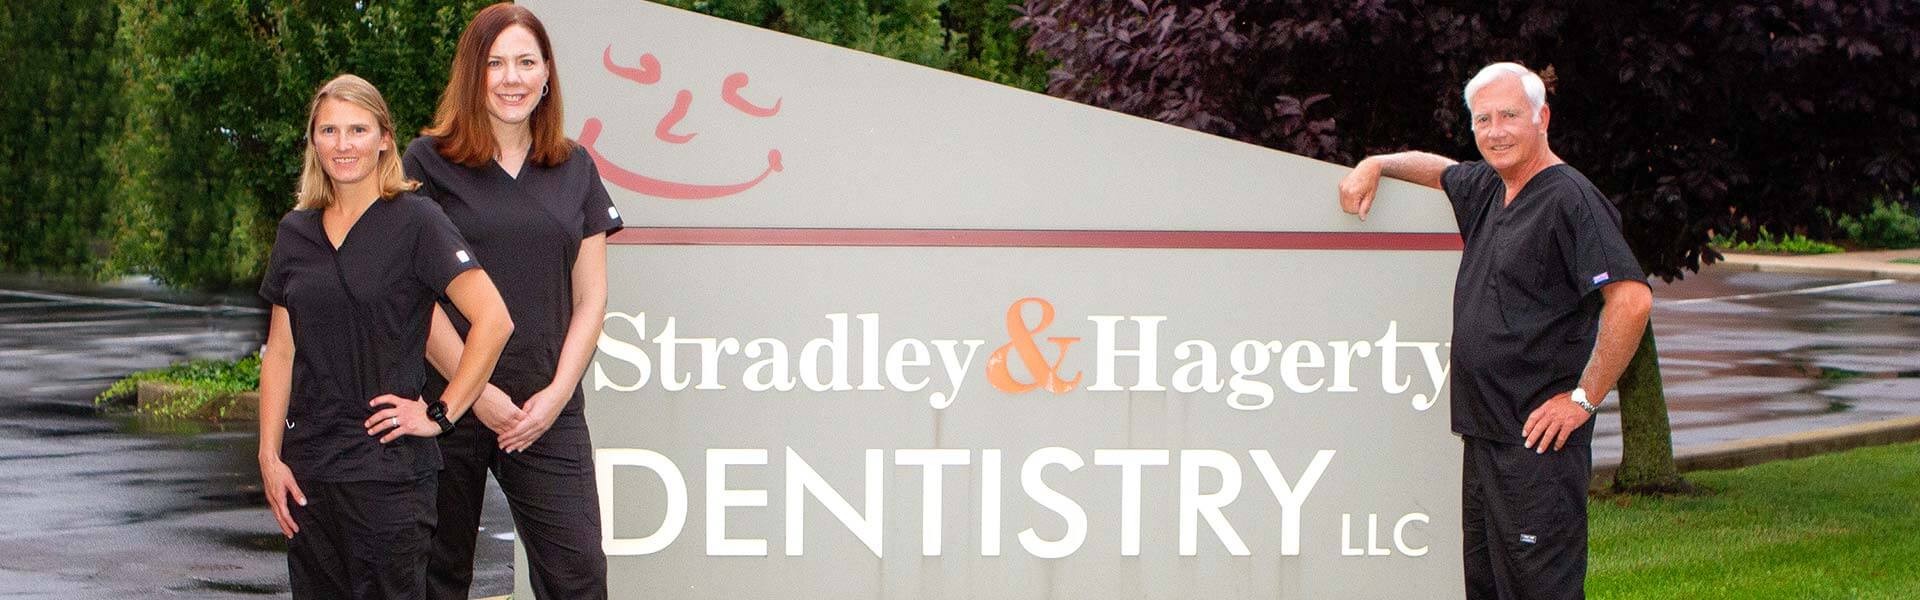 Doctors: Stradley Hagerty Dentistry LLC